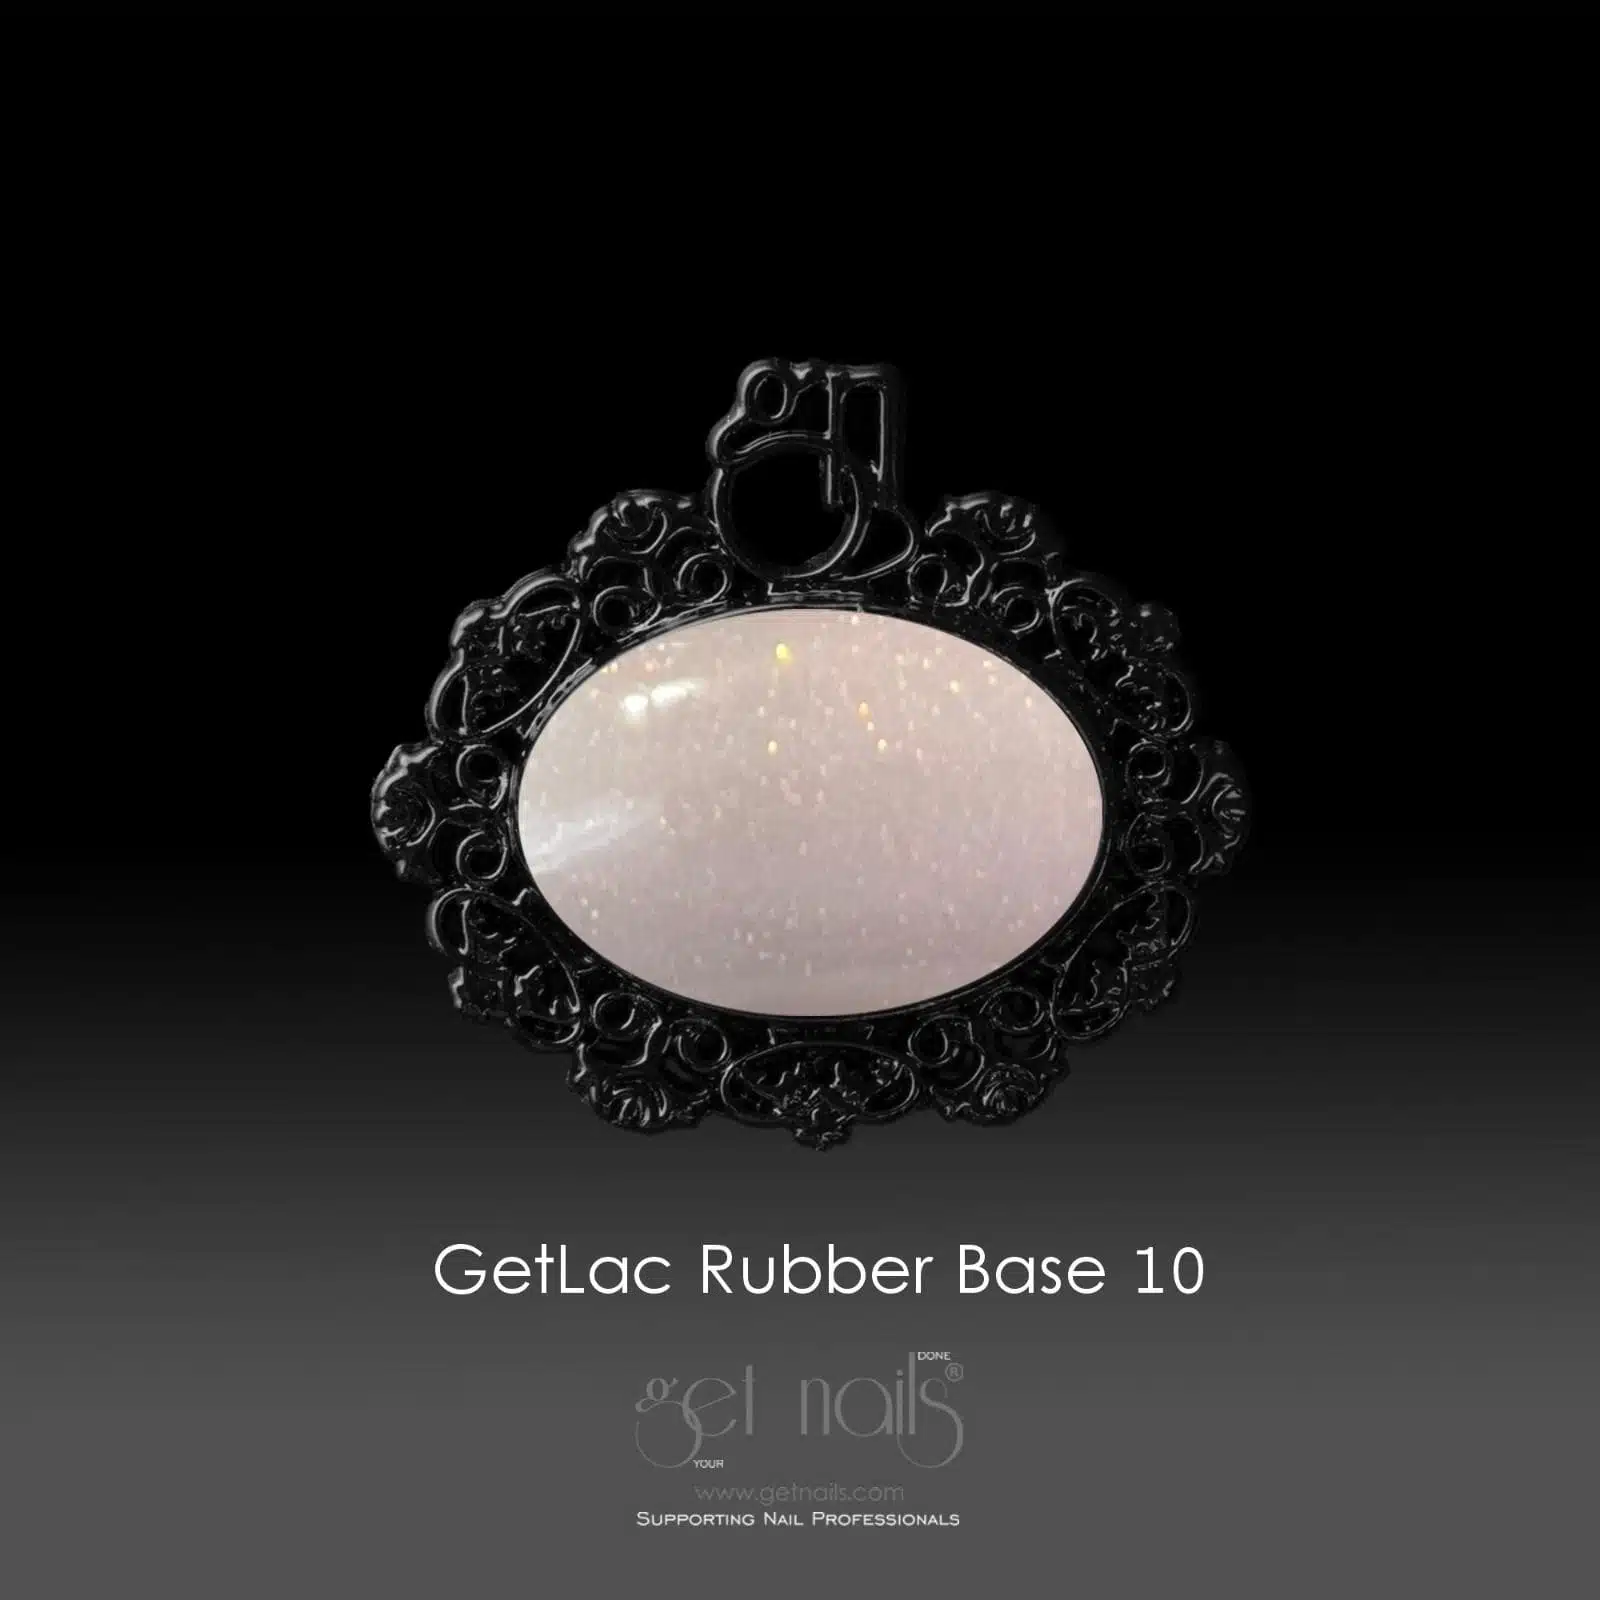 Get Nails Austria - GetLac Rubber Base 10 15g